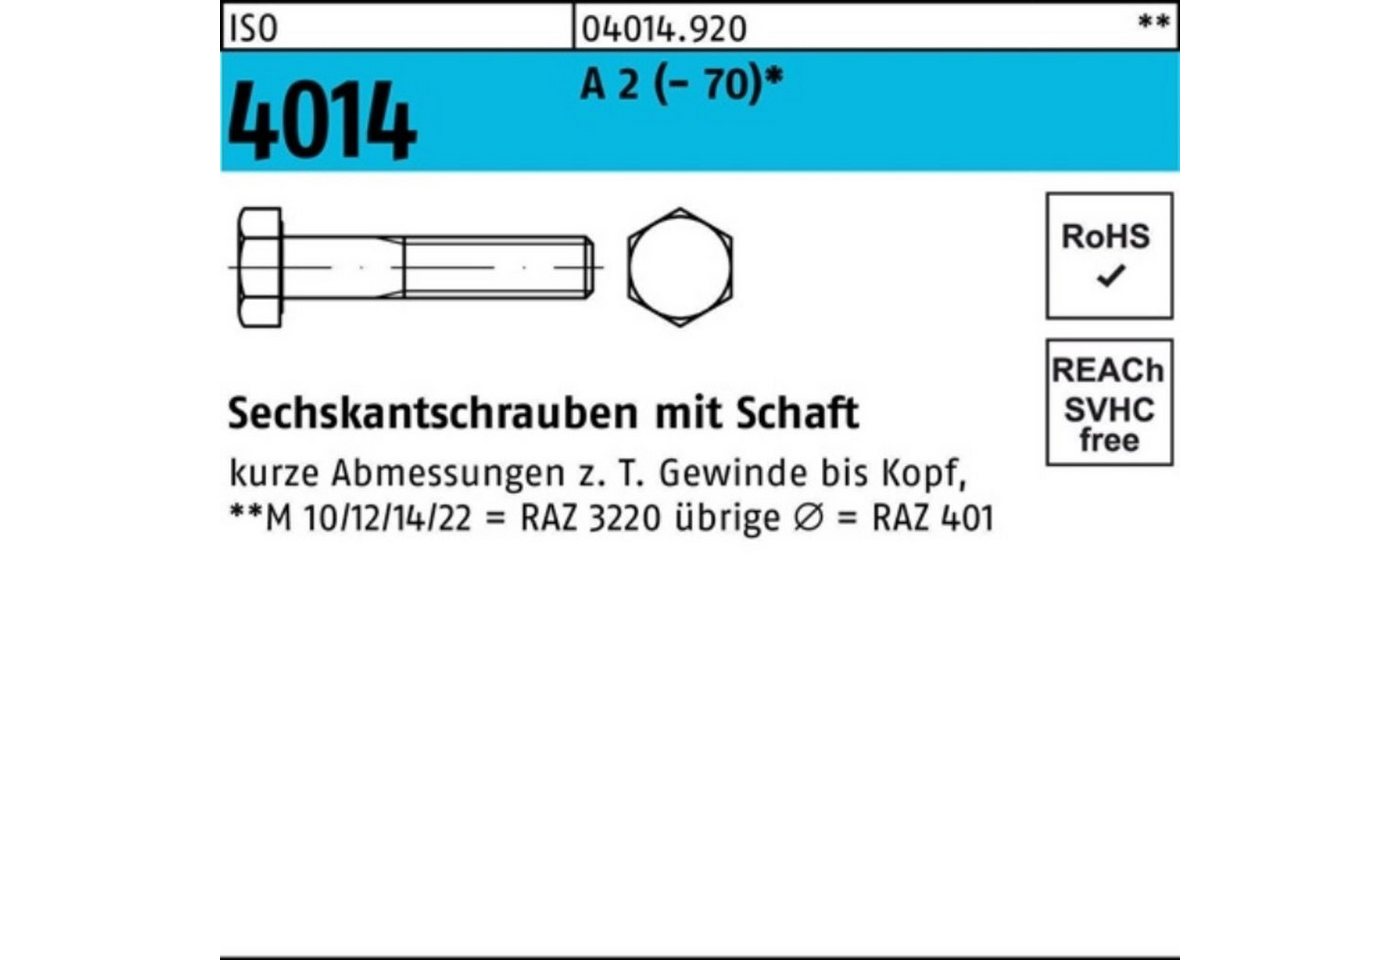 Bufab Sechskantschraube 100er Pack Sechskantschraube ISO 4014 Schaft M24x 120 A 2 (70) 1 St von Bufab